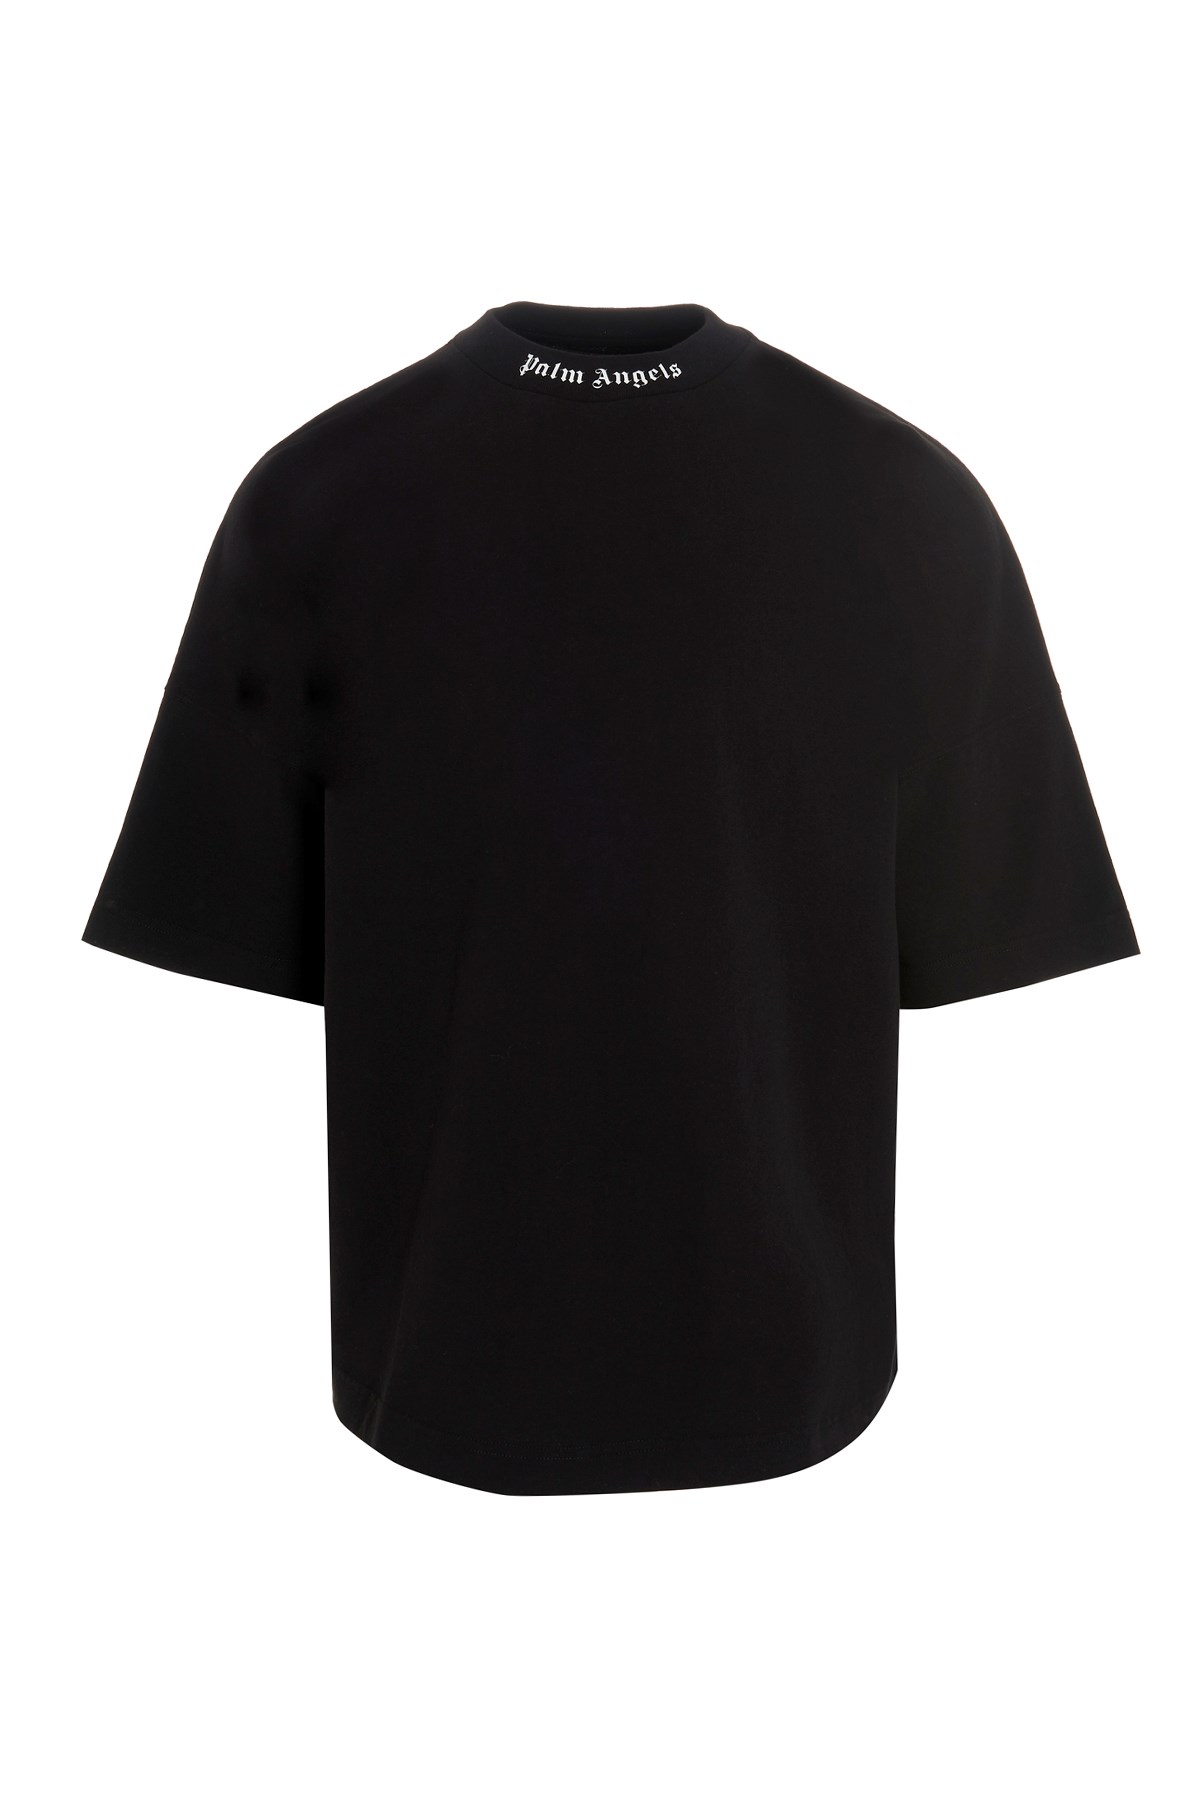 PALM ANGELS 'Classic Over Logo' T-Shirt